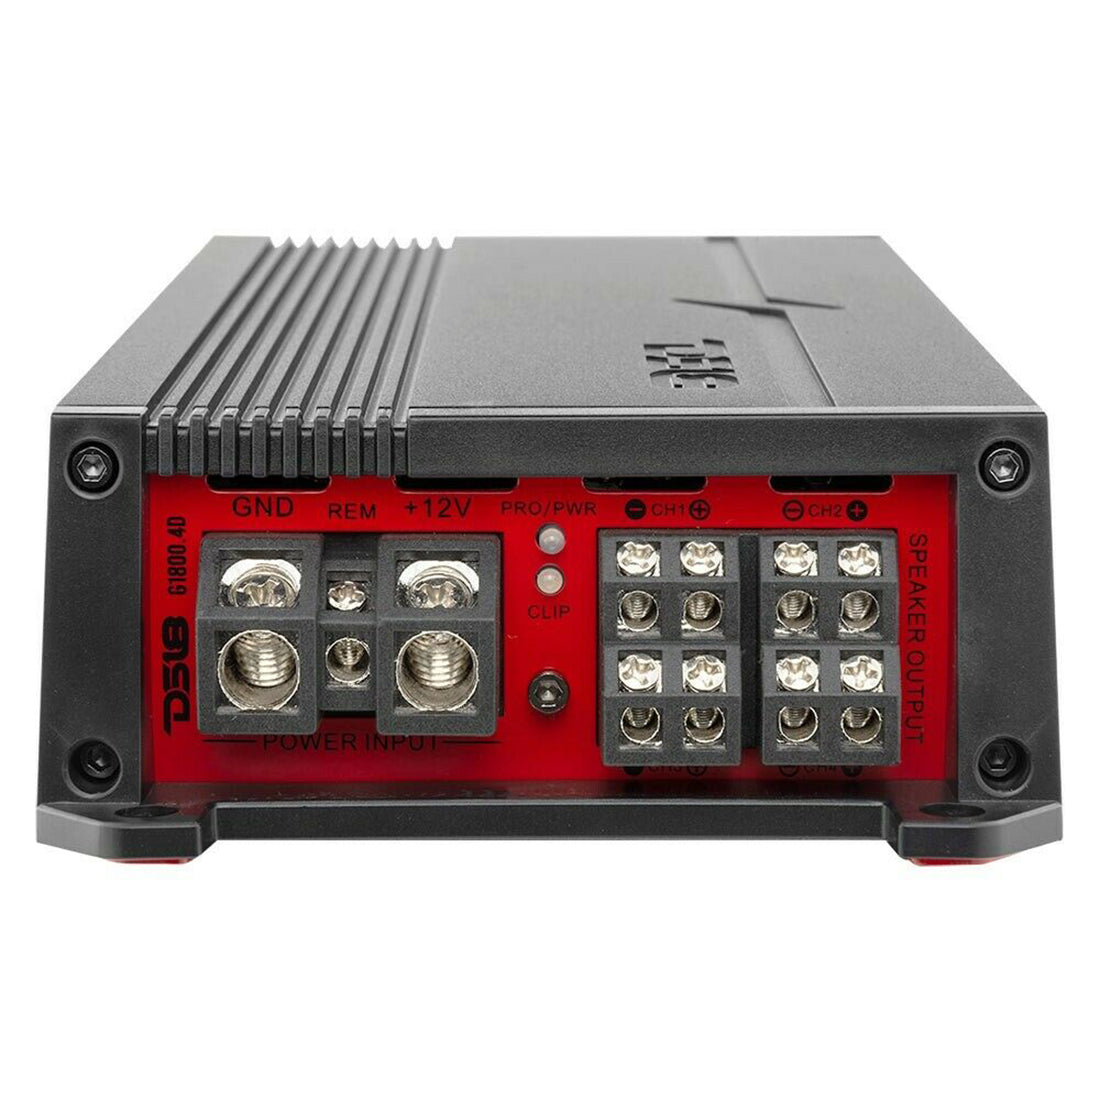 DS18 G1800.4D 1800W Max 4-Channel Class-D Stereo Full Range Car Audio Amplifier